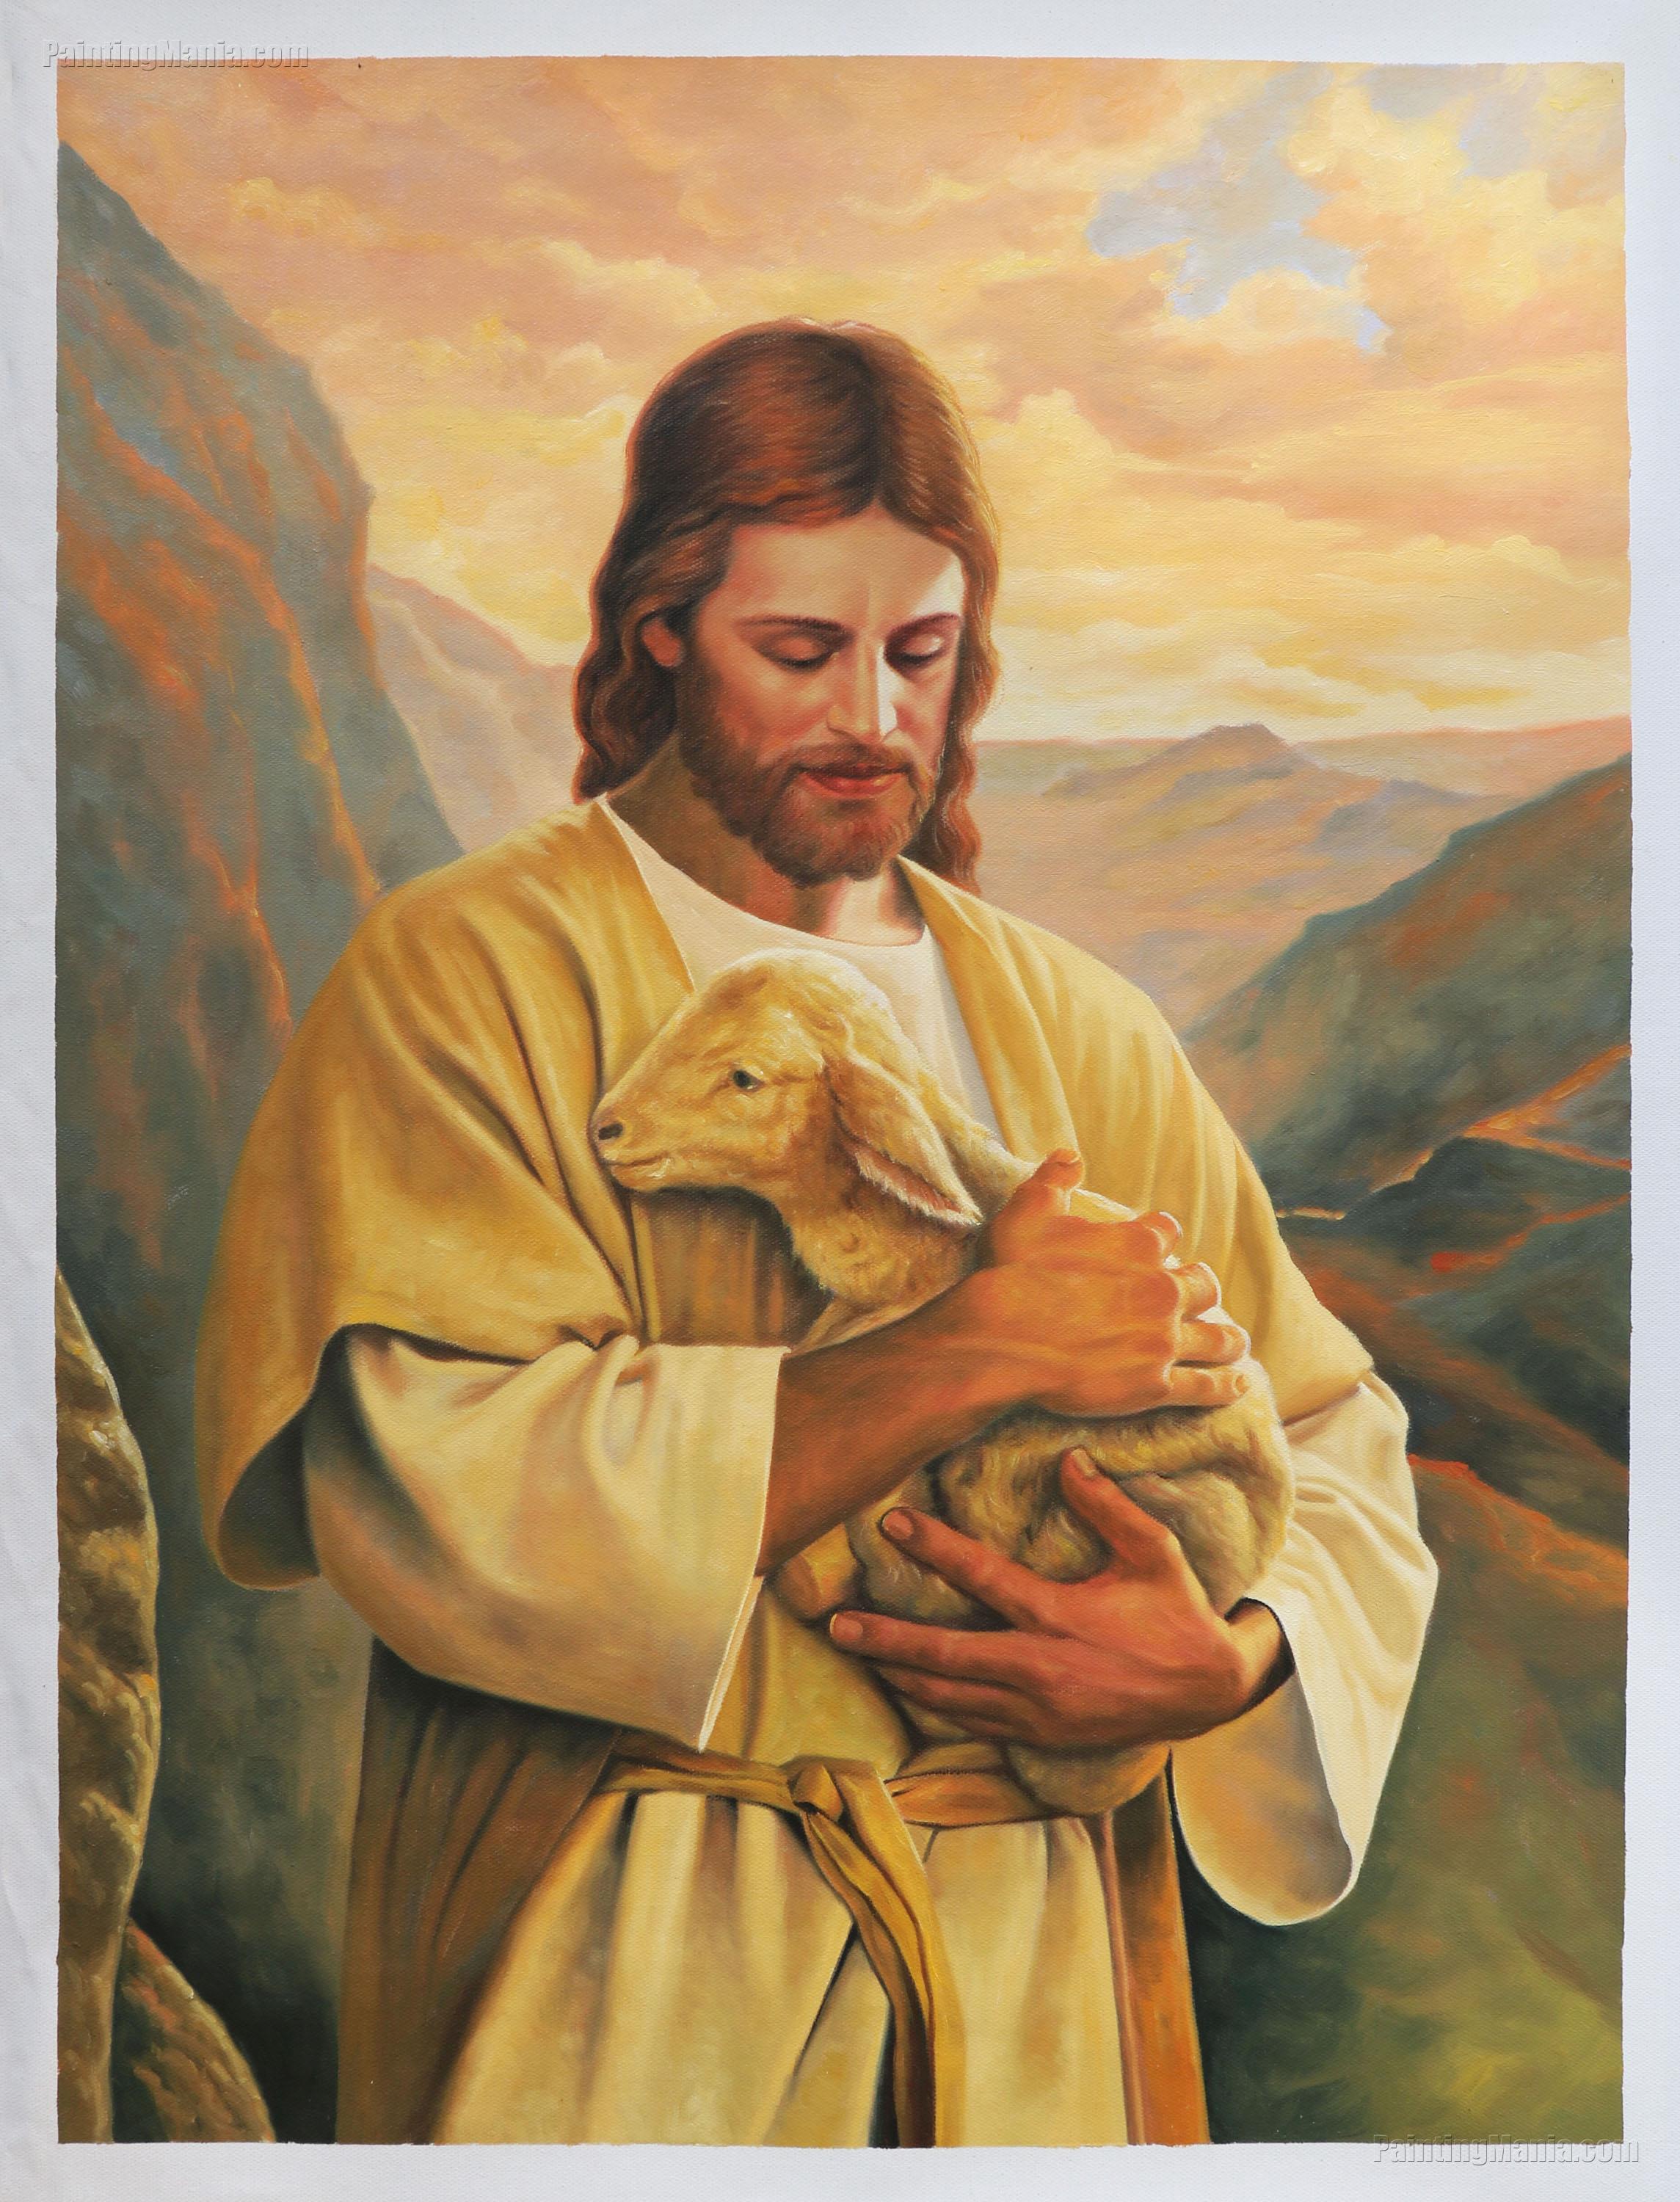 Jesus Christ with Lamb